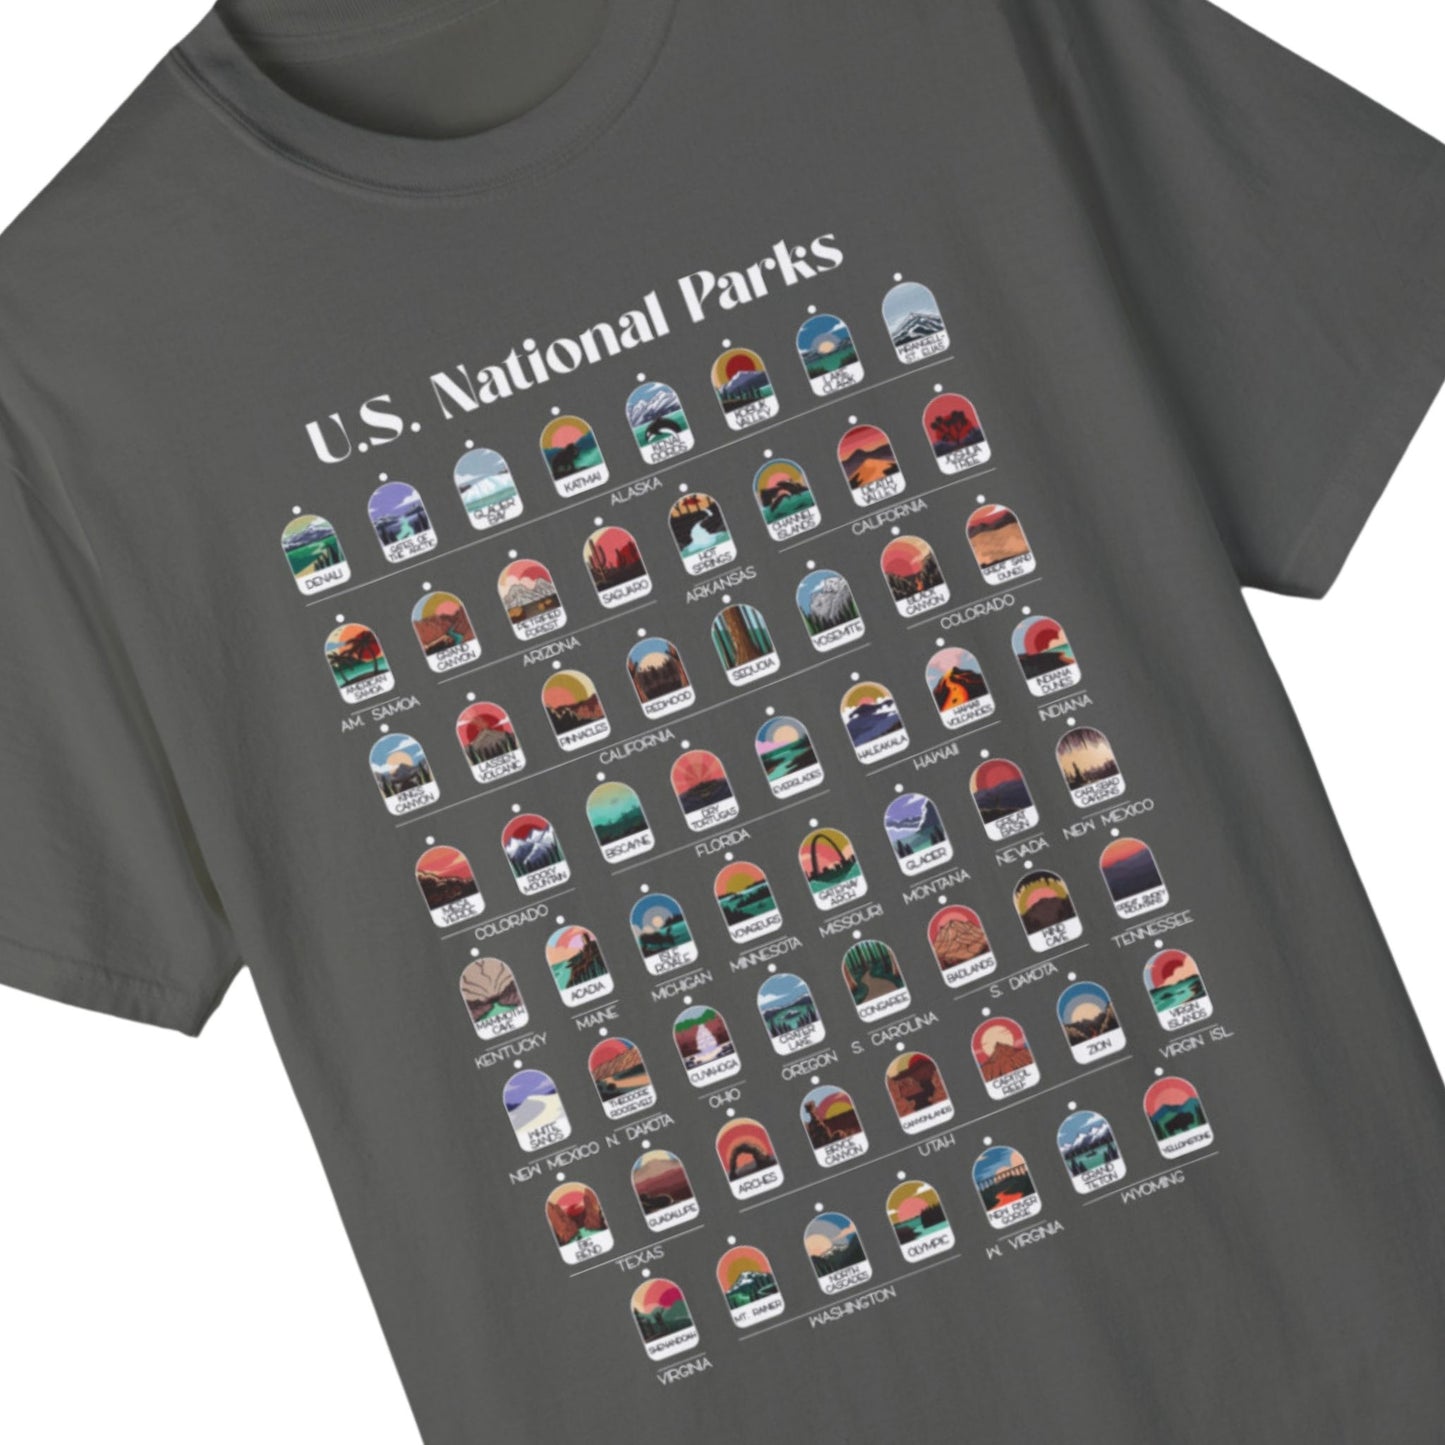 National Parks Tracker T-Shirt